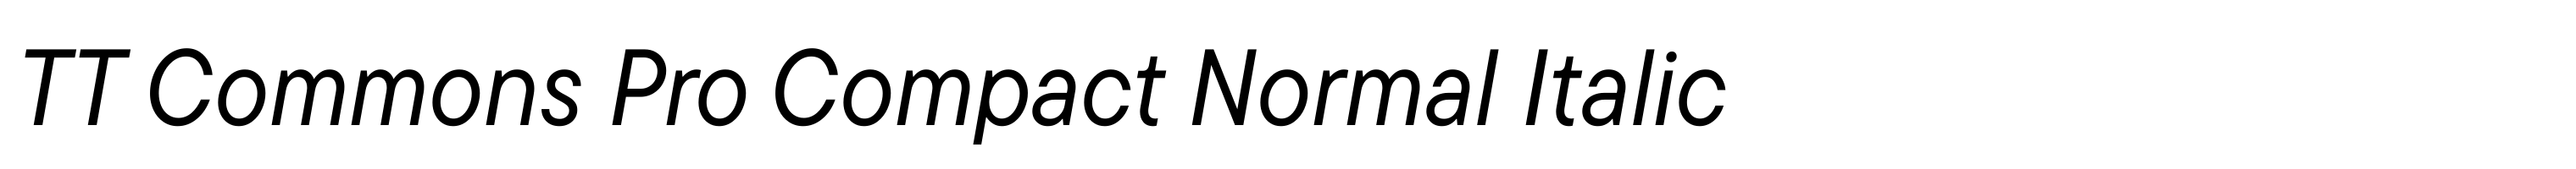 TT Commons Pro Compact Normal Italic